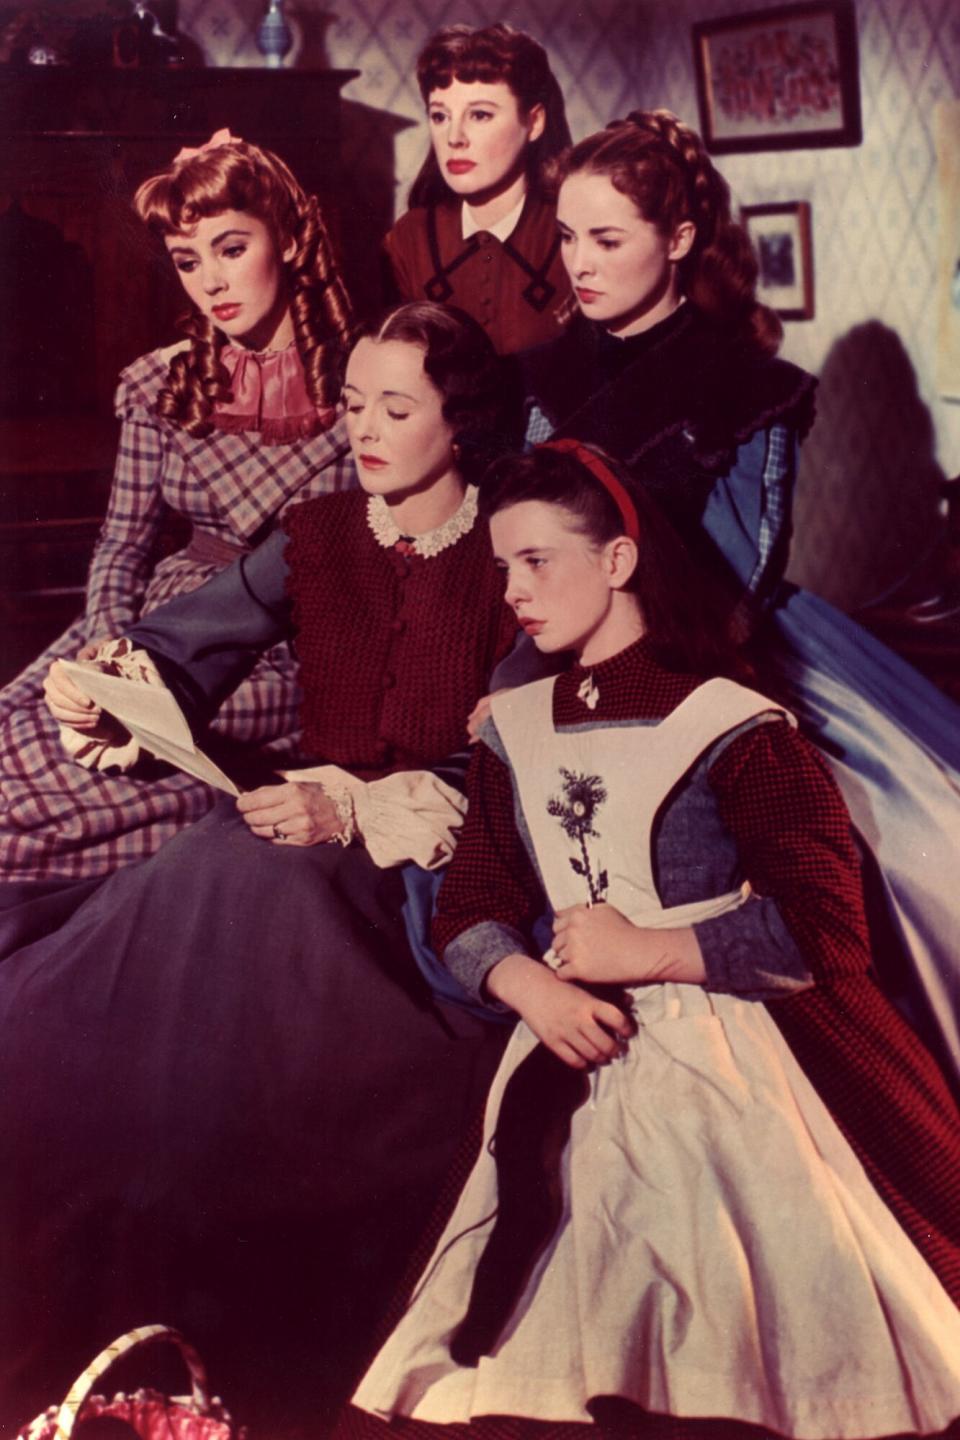 5. Little Women (1949 movie)